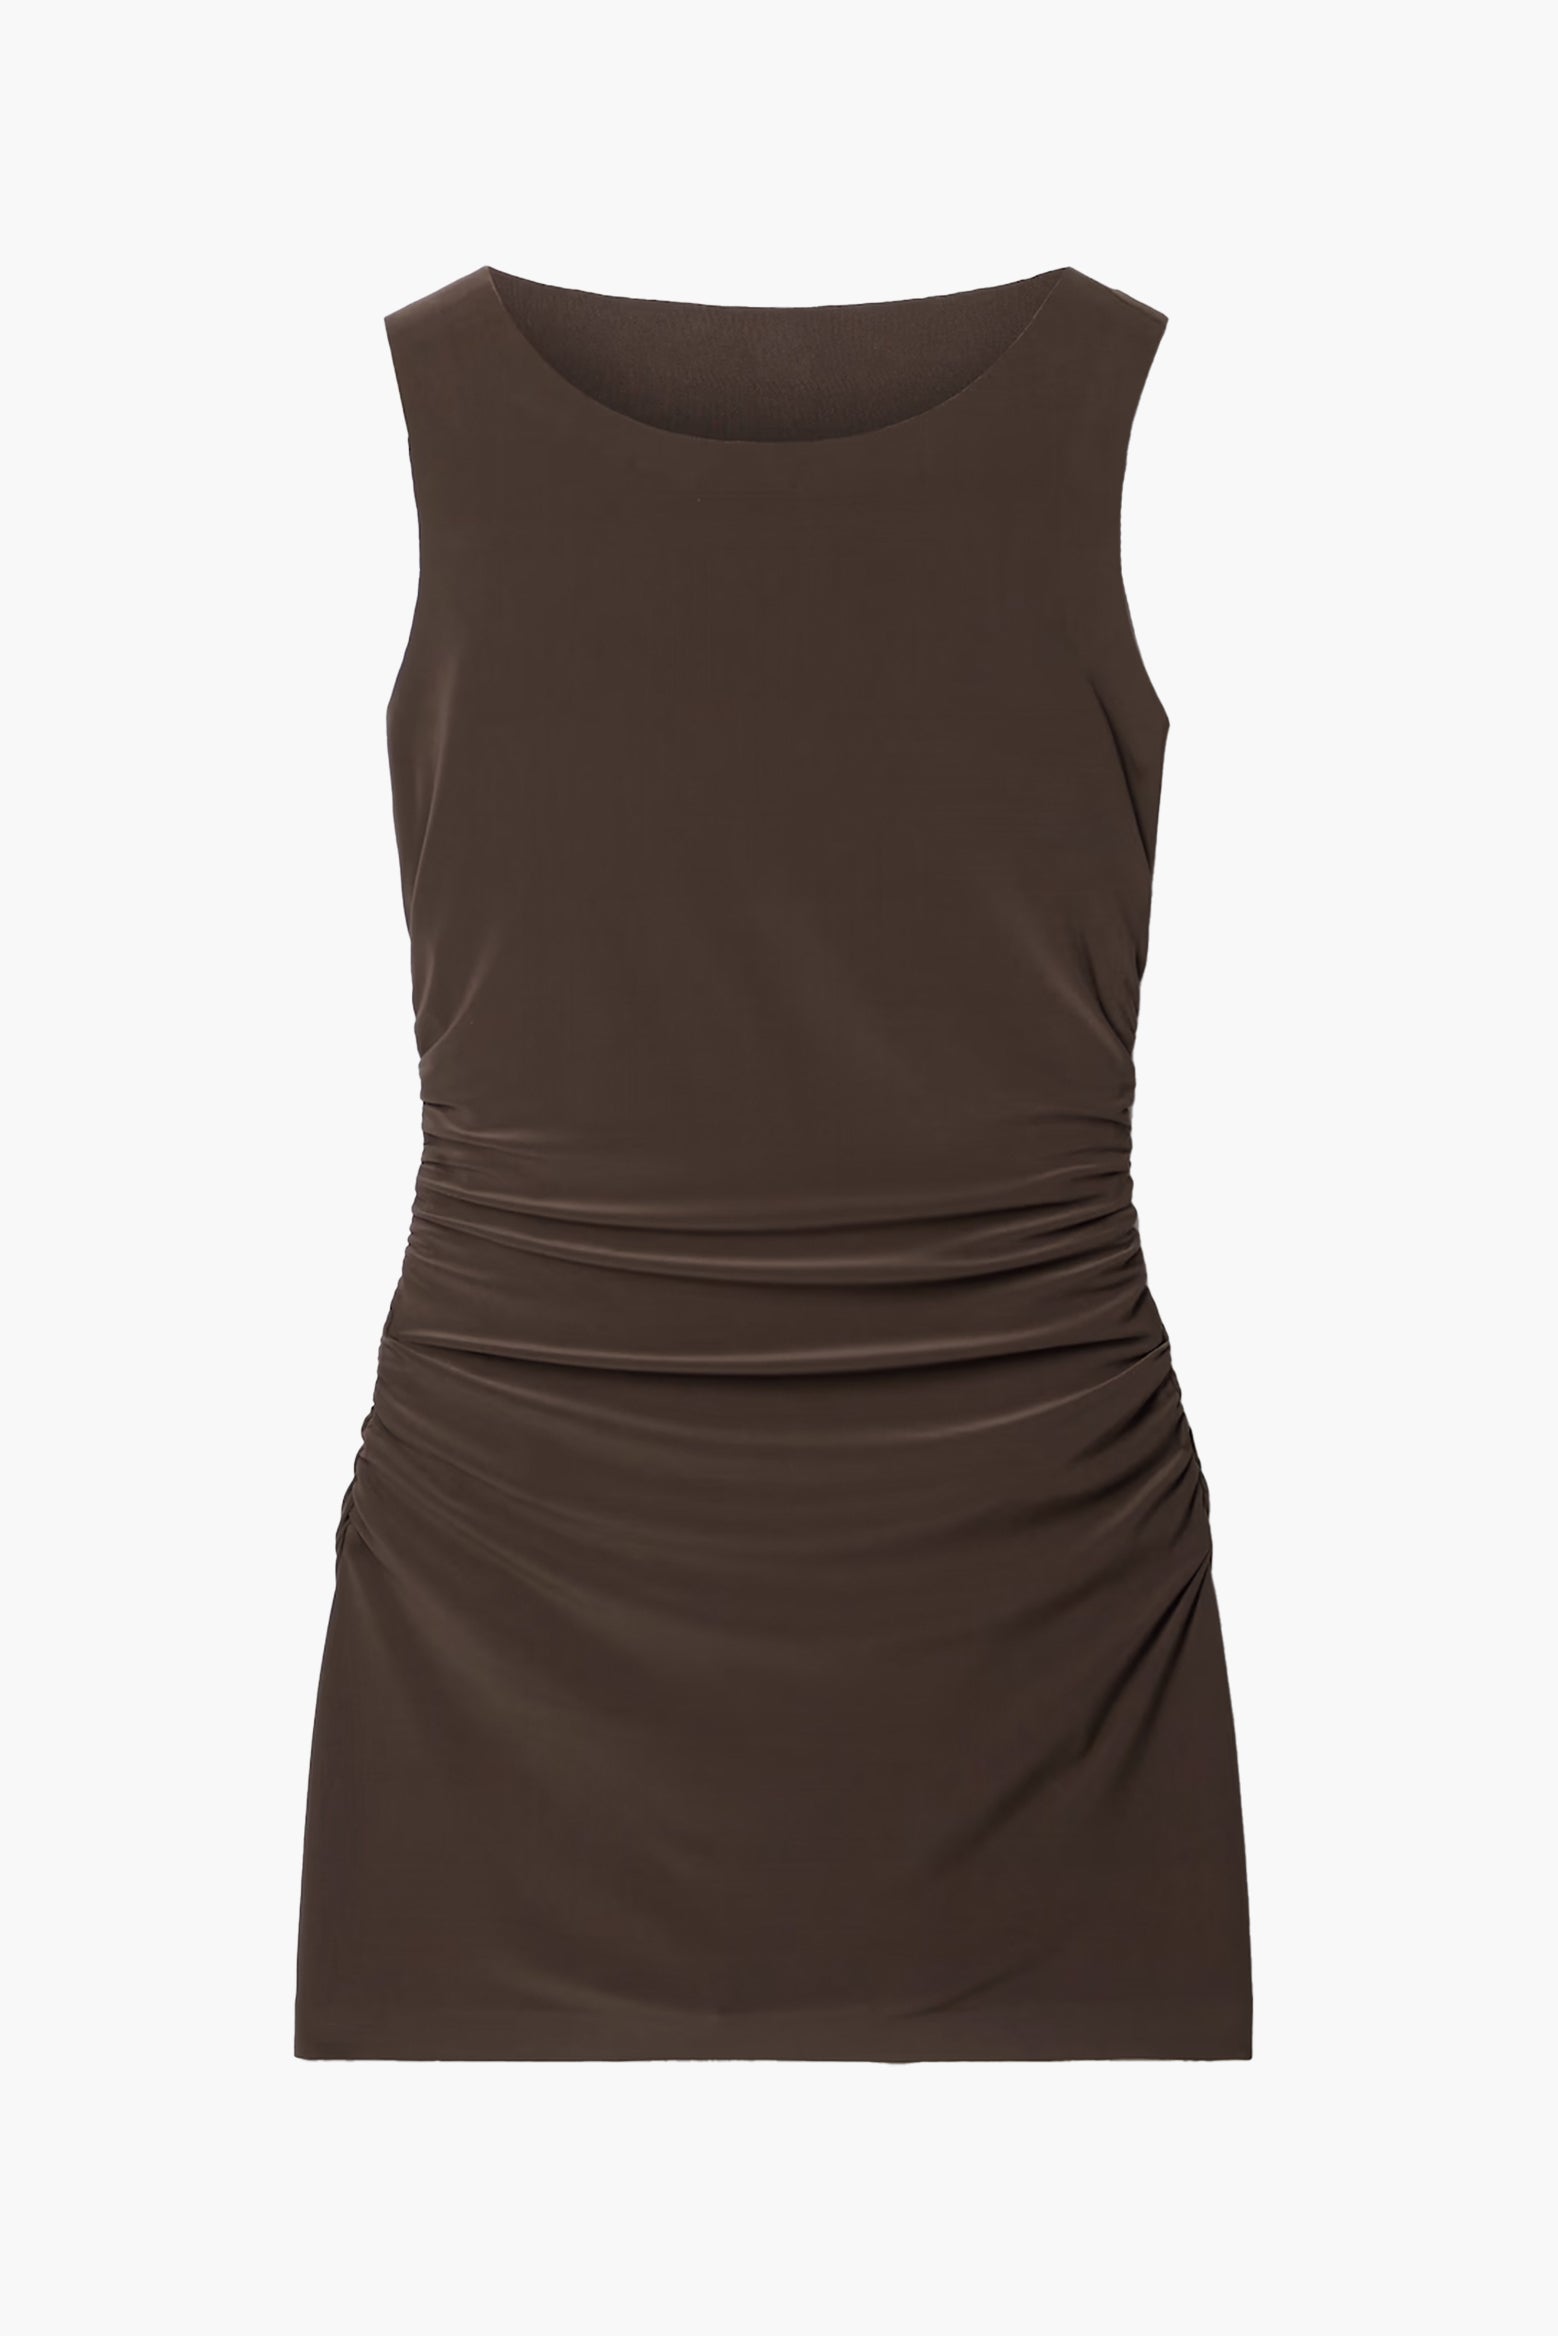 Norma Kamali Sleeveless Pickleball Mini Dress in Chocolate available at The New Trend Australia.